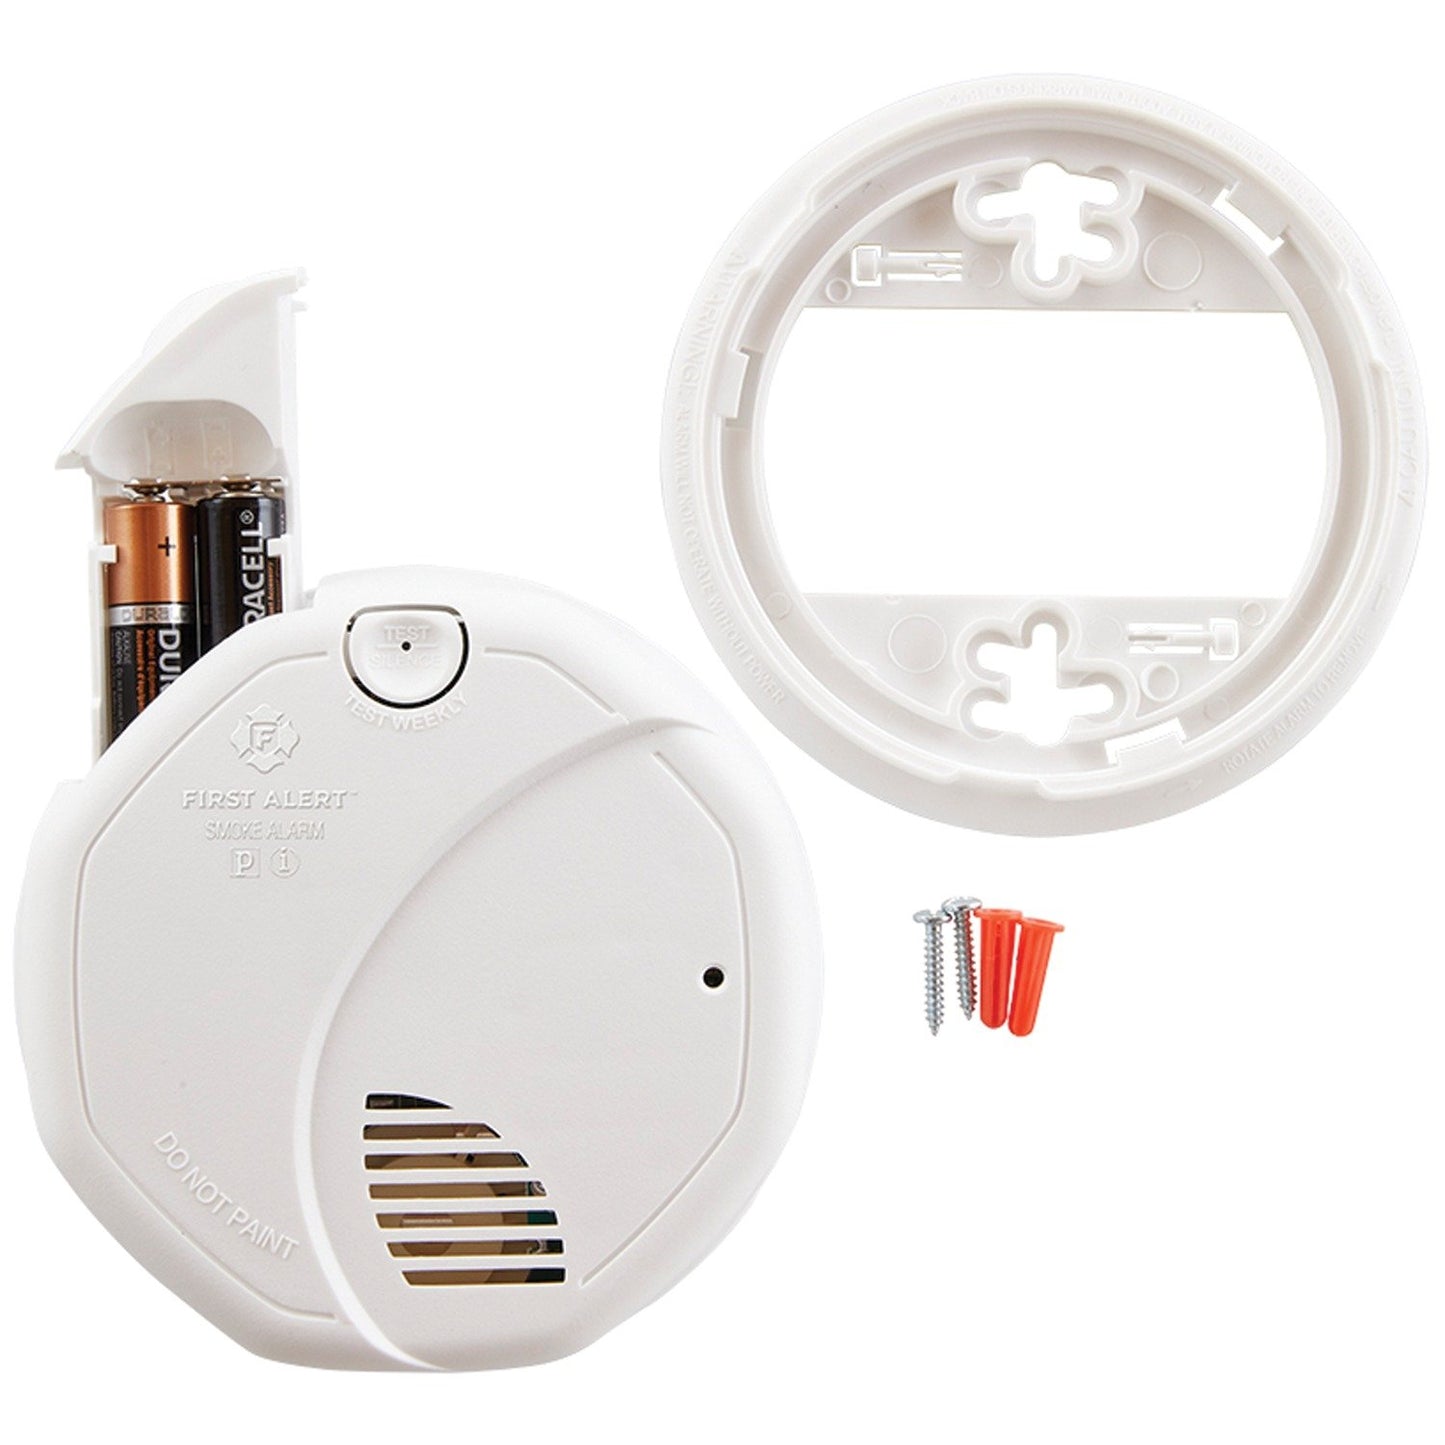 FIRST ALERT 1039828 Dual-Sensor Smoke & Fire Alarm